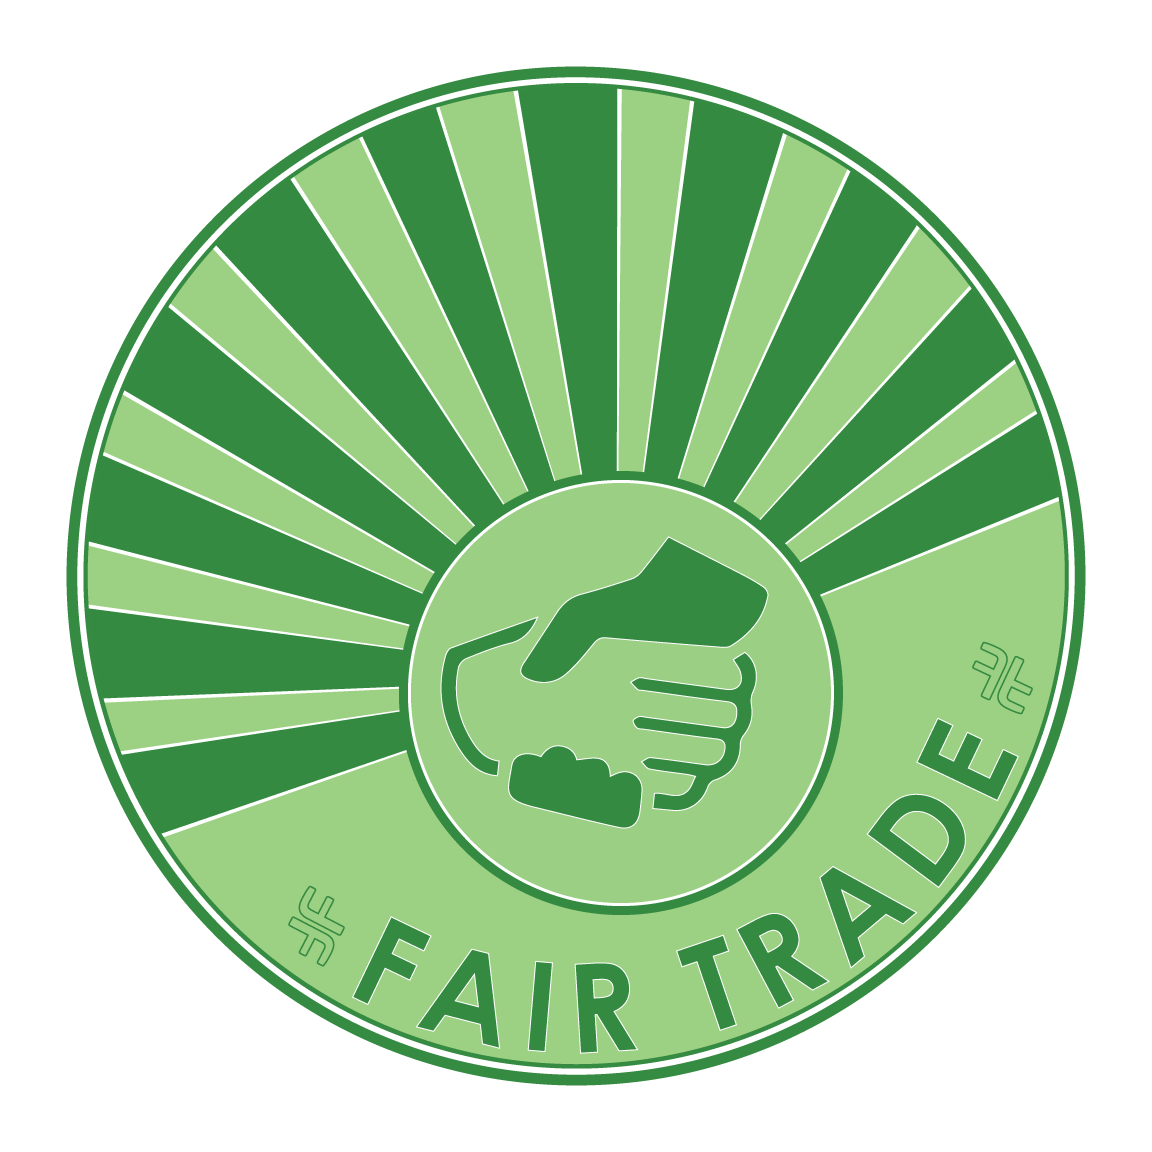 Fair Trade Fashion product seal